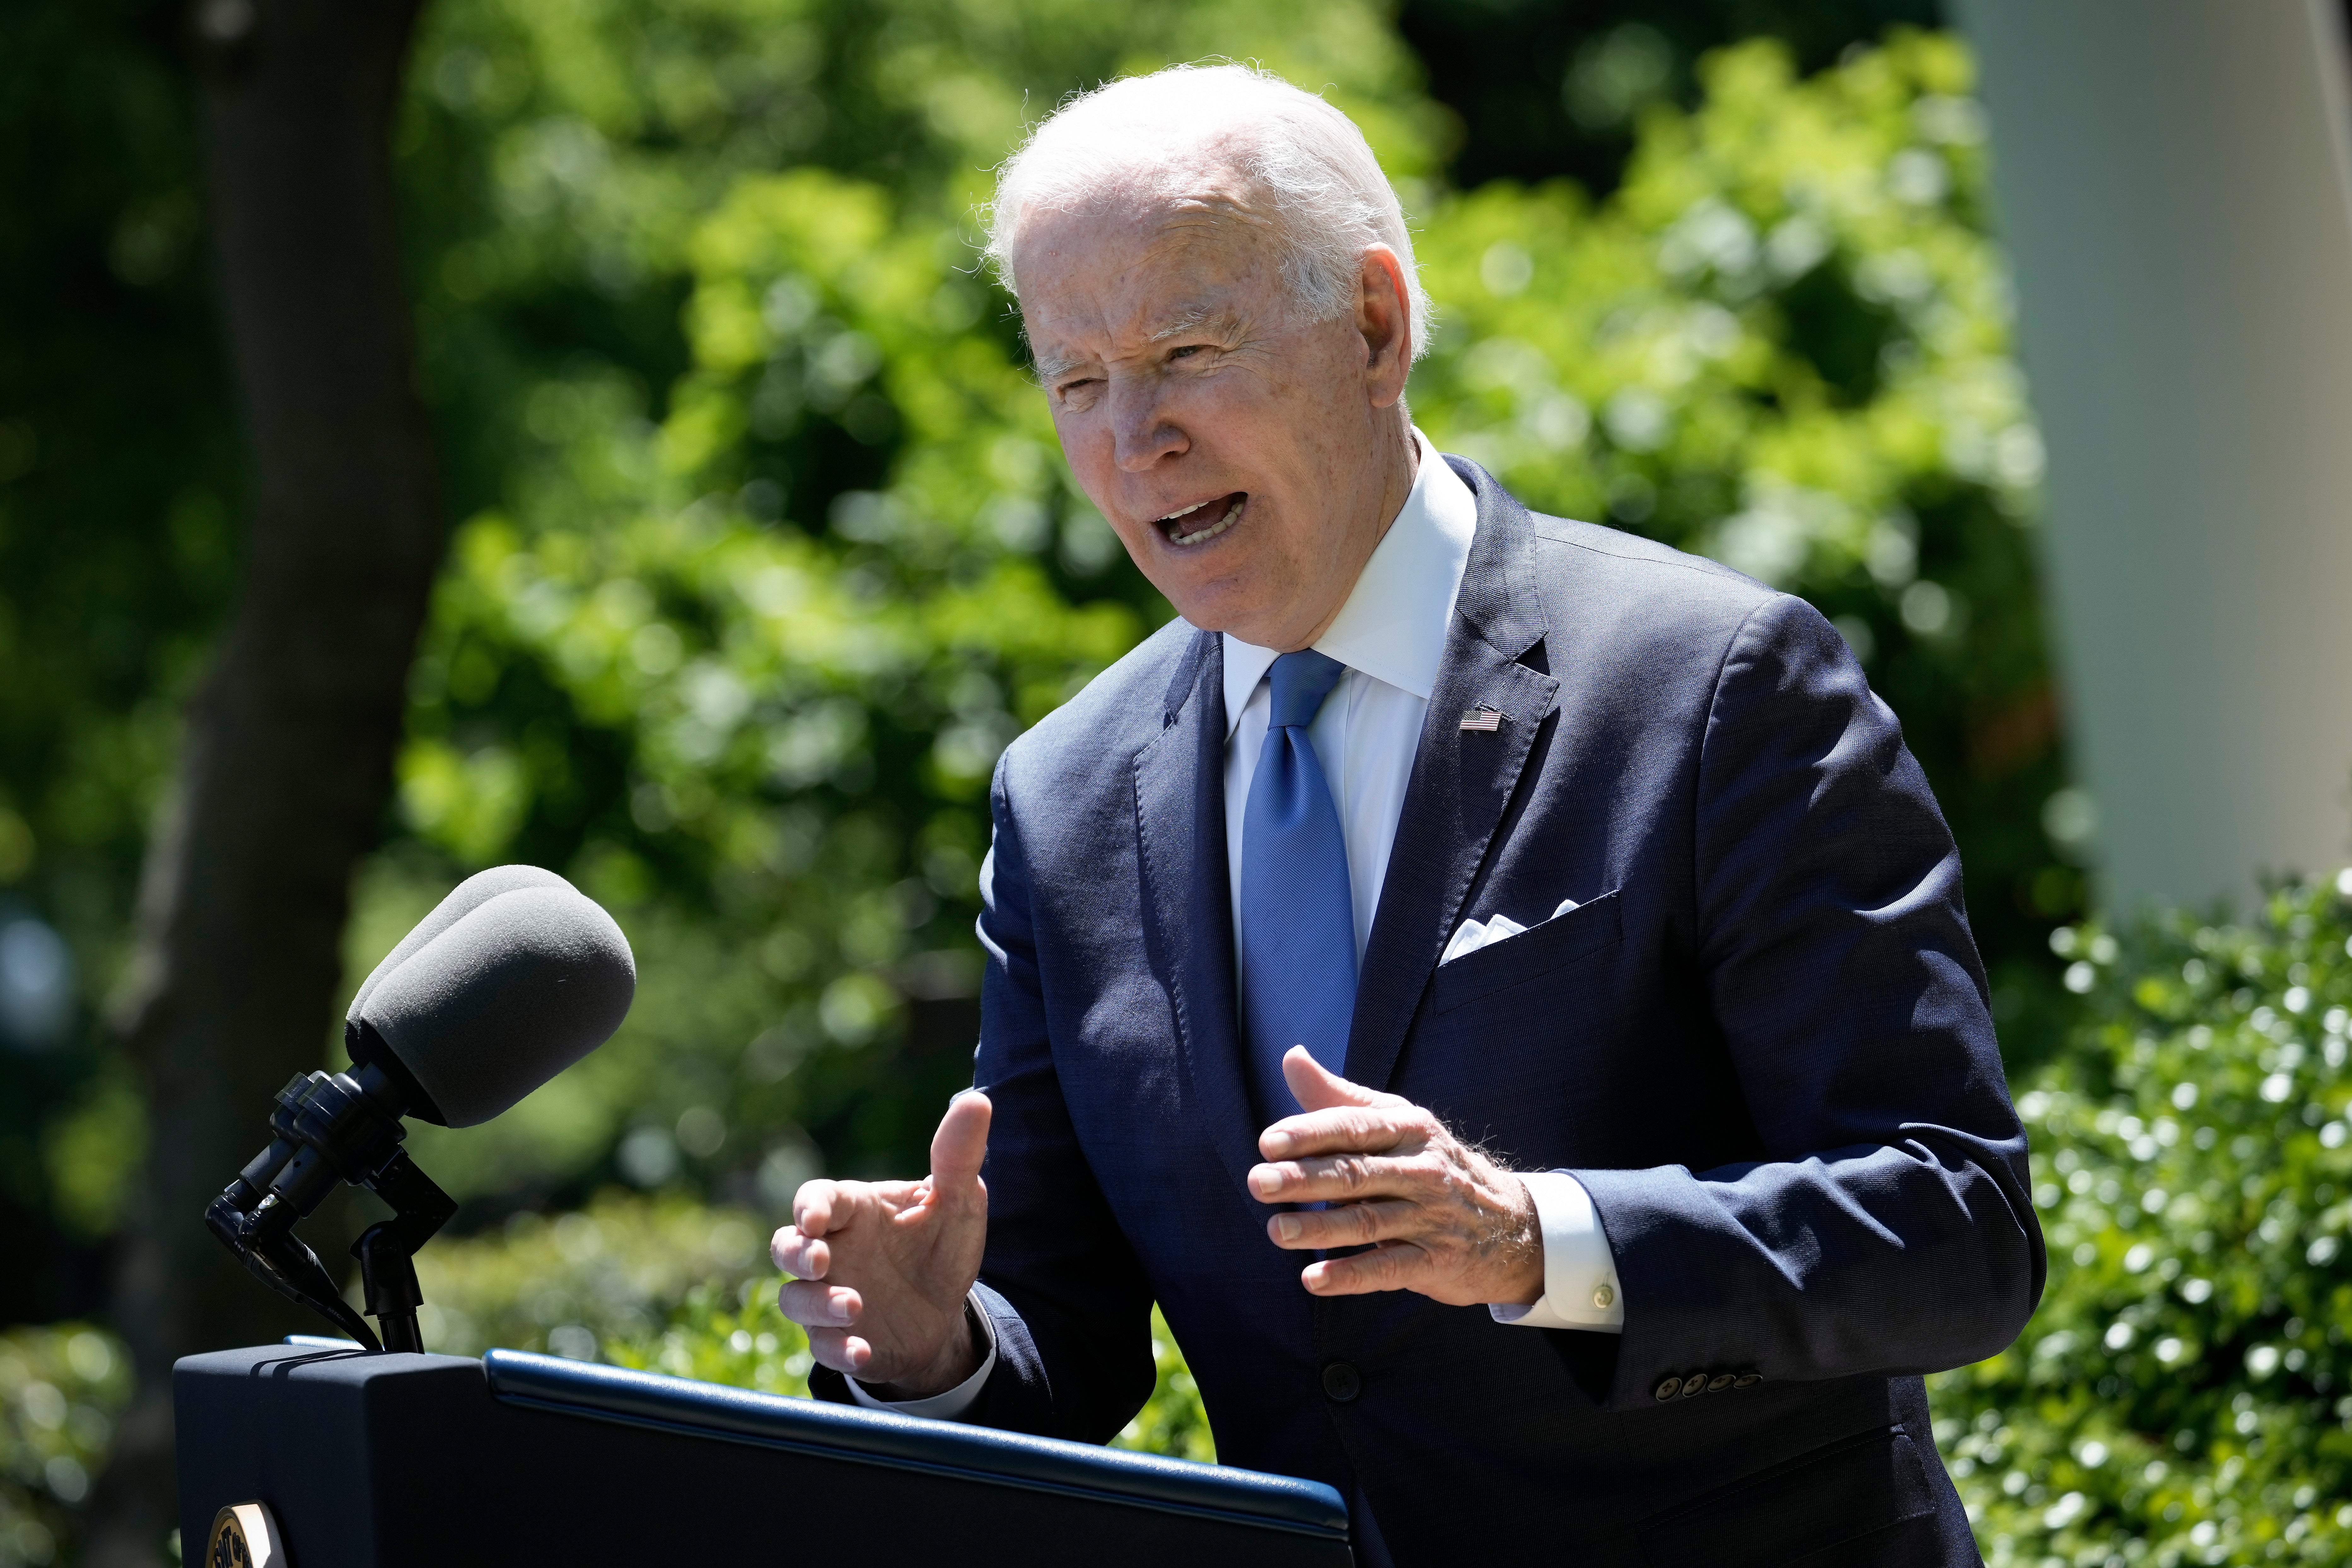 Joe Biden speaks during an event in the Rose Garden of the White House